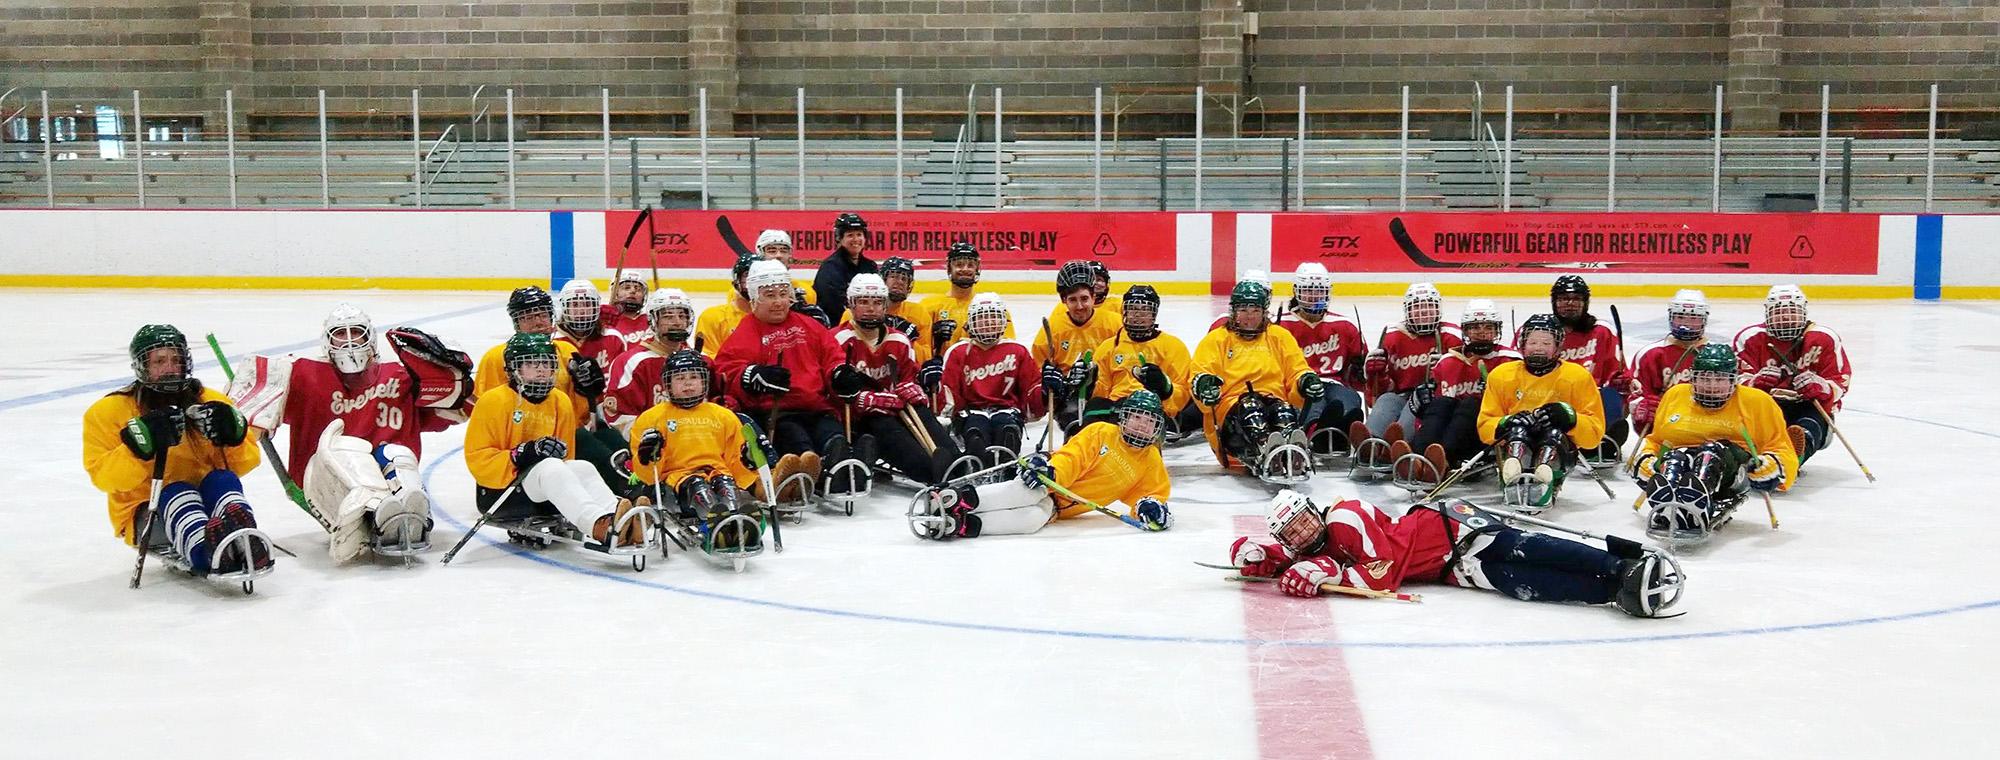 Group photo, sled hockey players